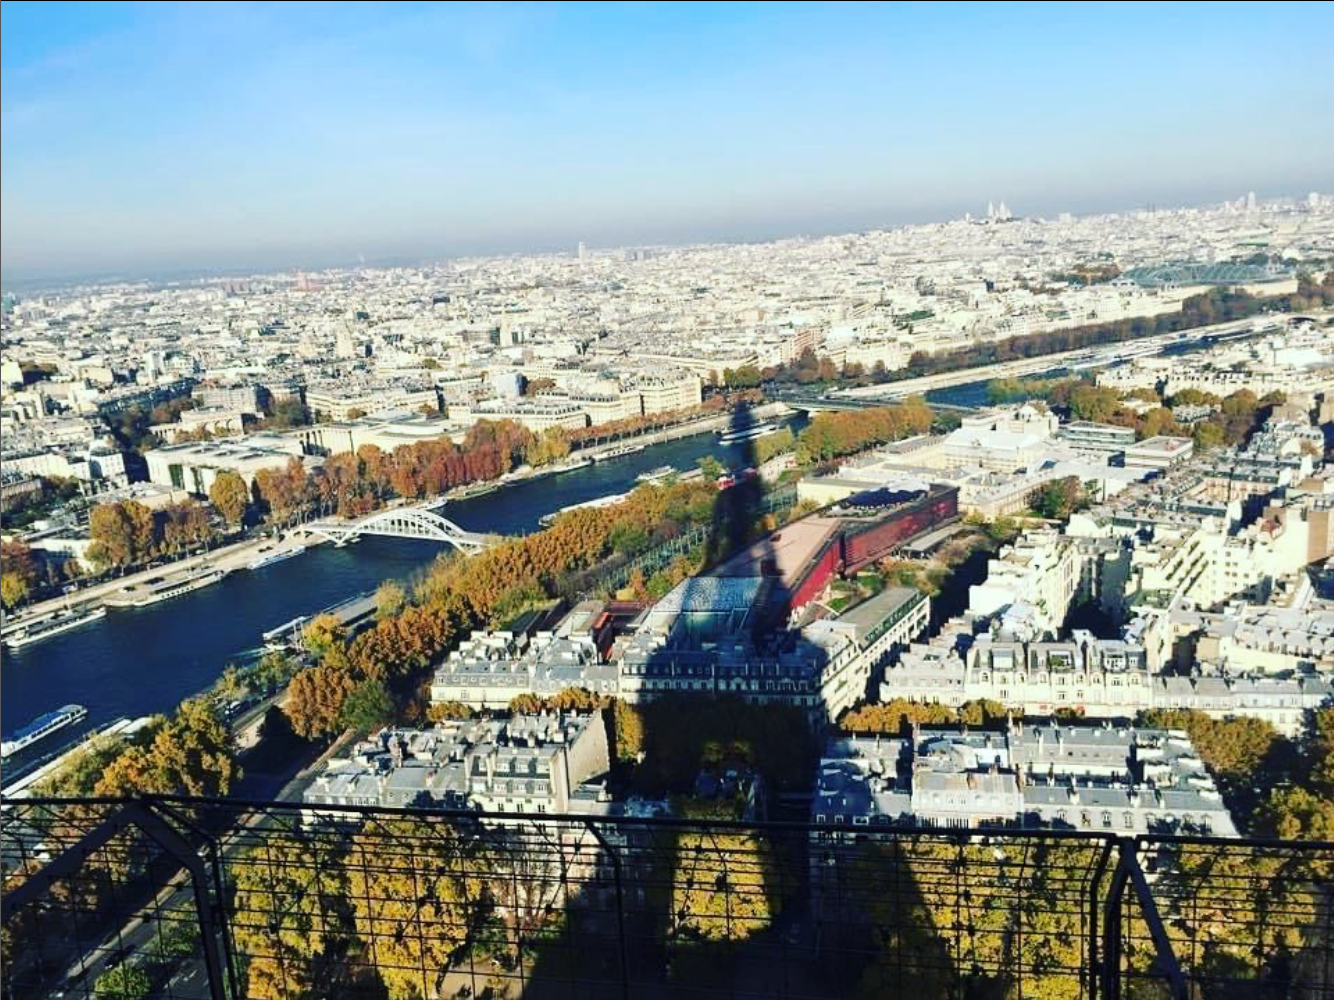 view of paris 